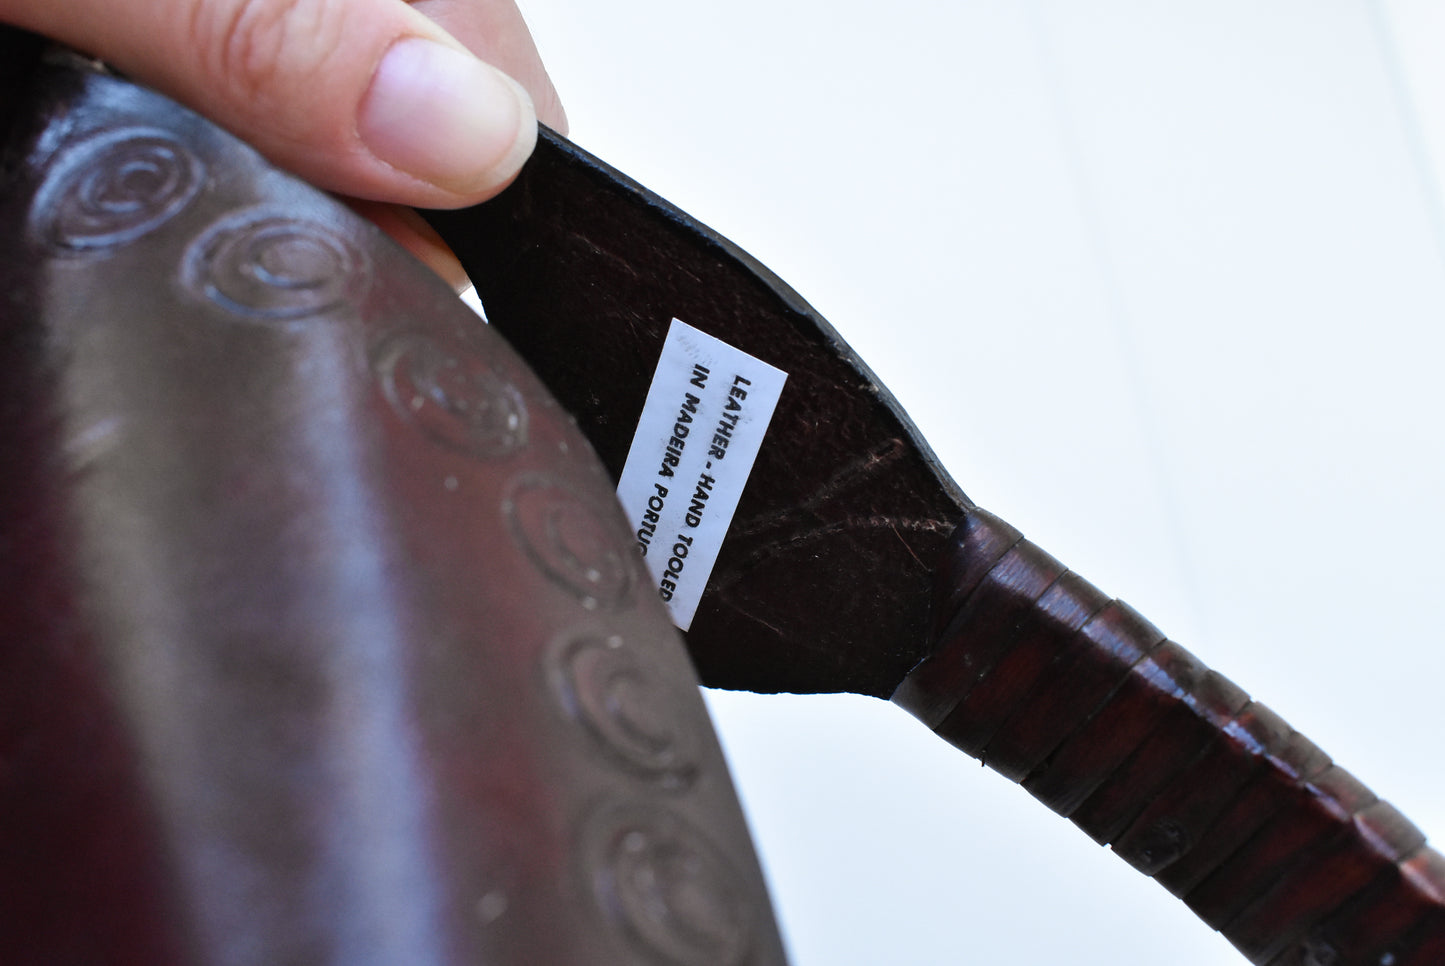 Portuguese hand-tooled leather wine bottle holder